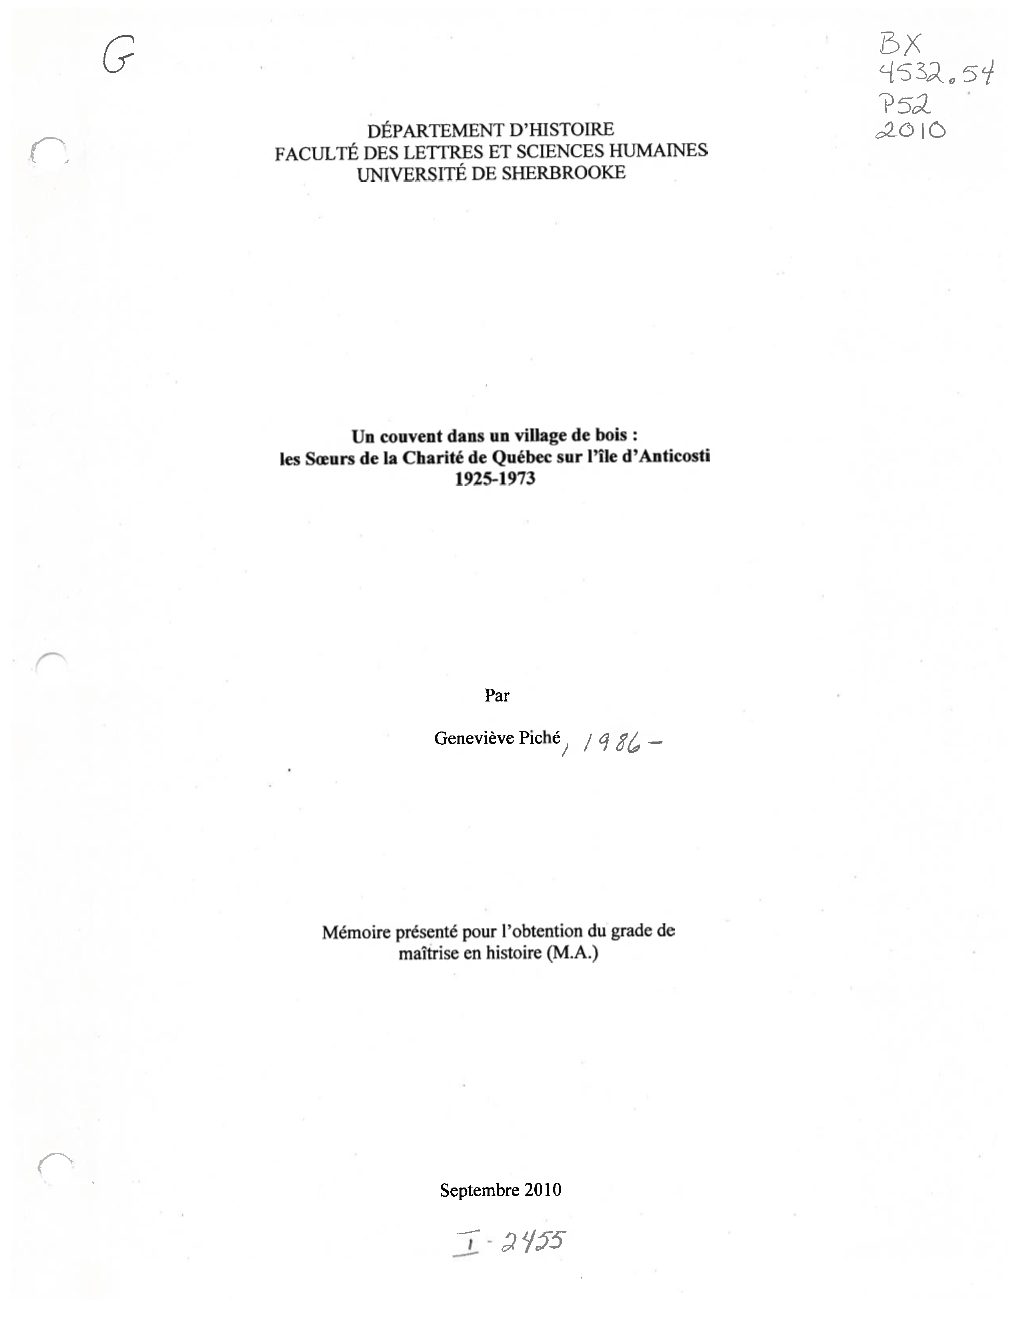 Document Principal (8.326Mb)